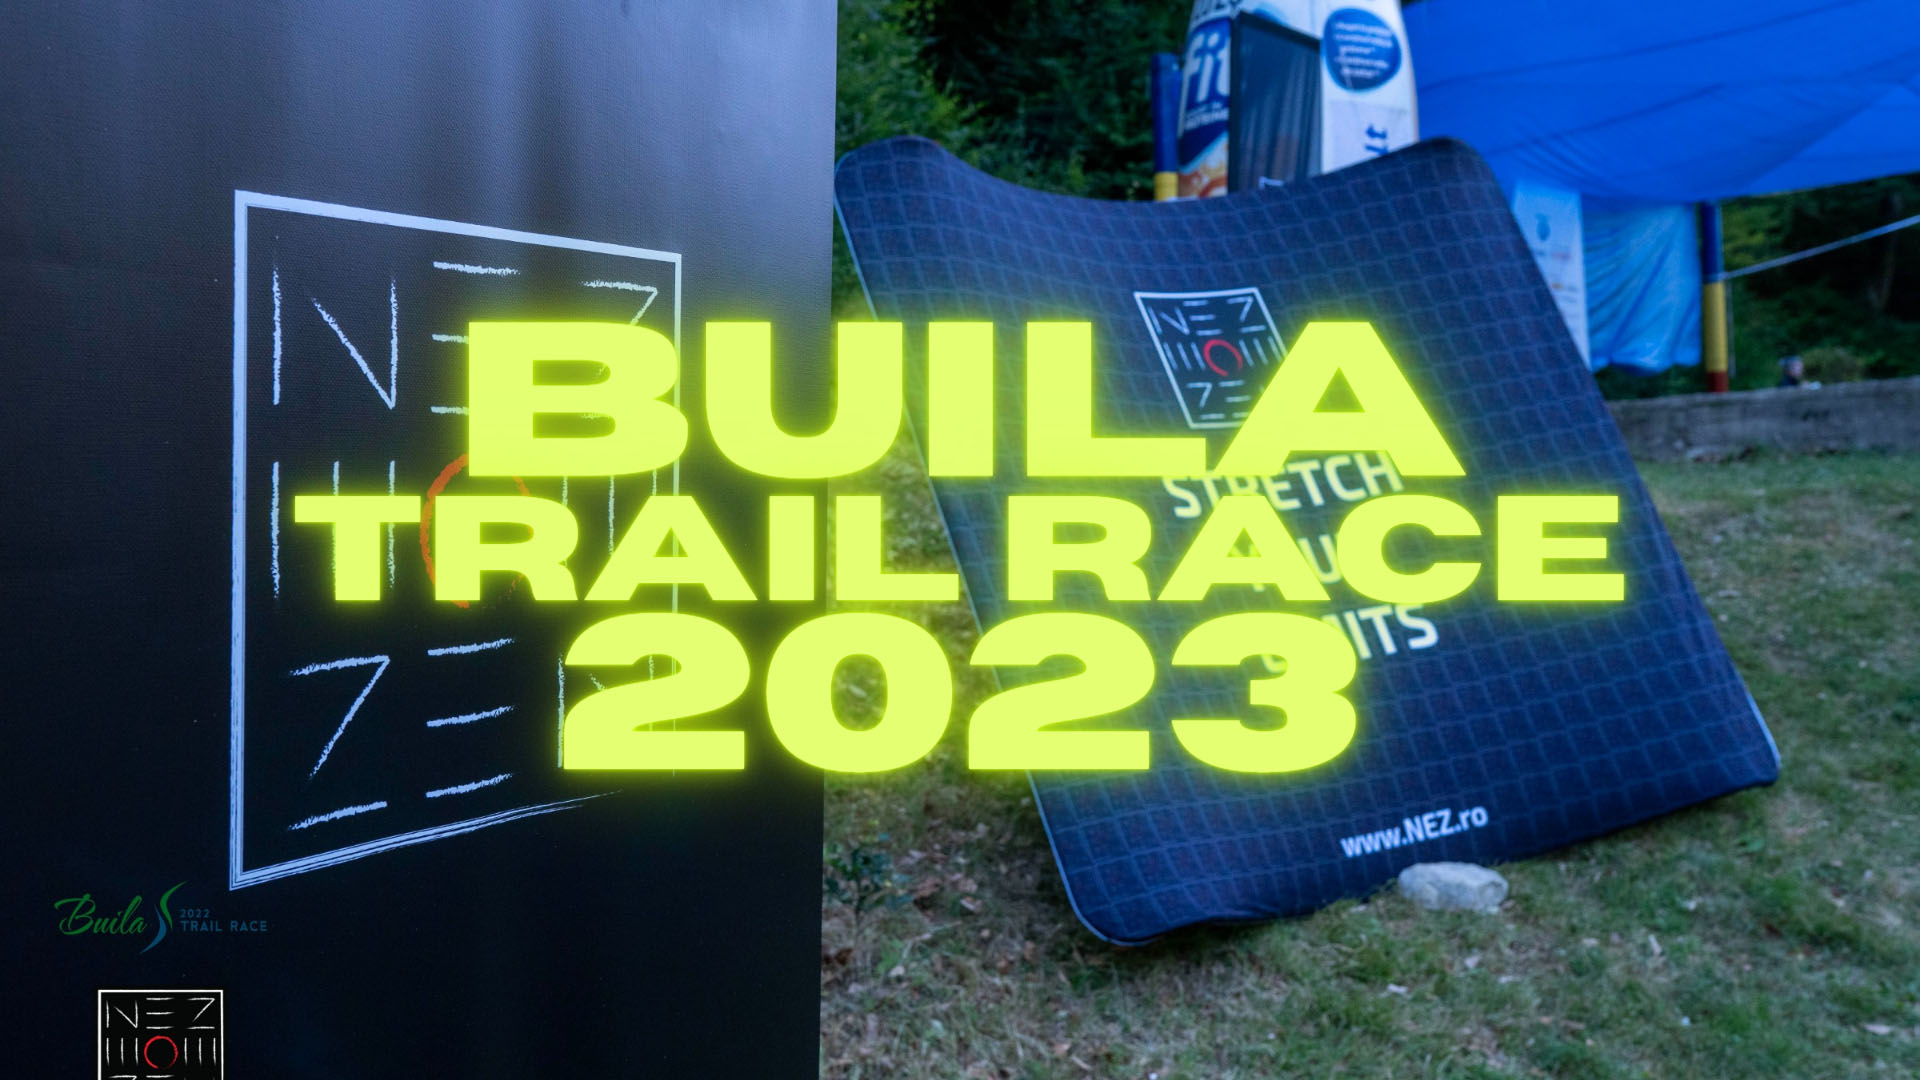 NEZ BUILA TRAIL RACE 2023